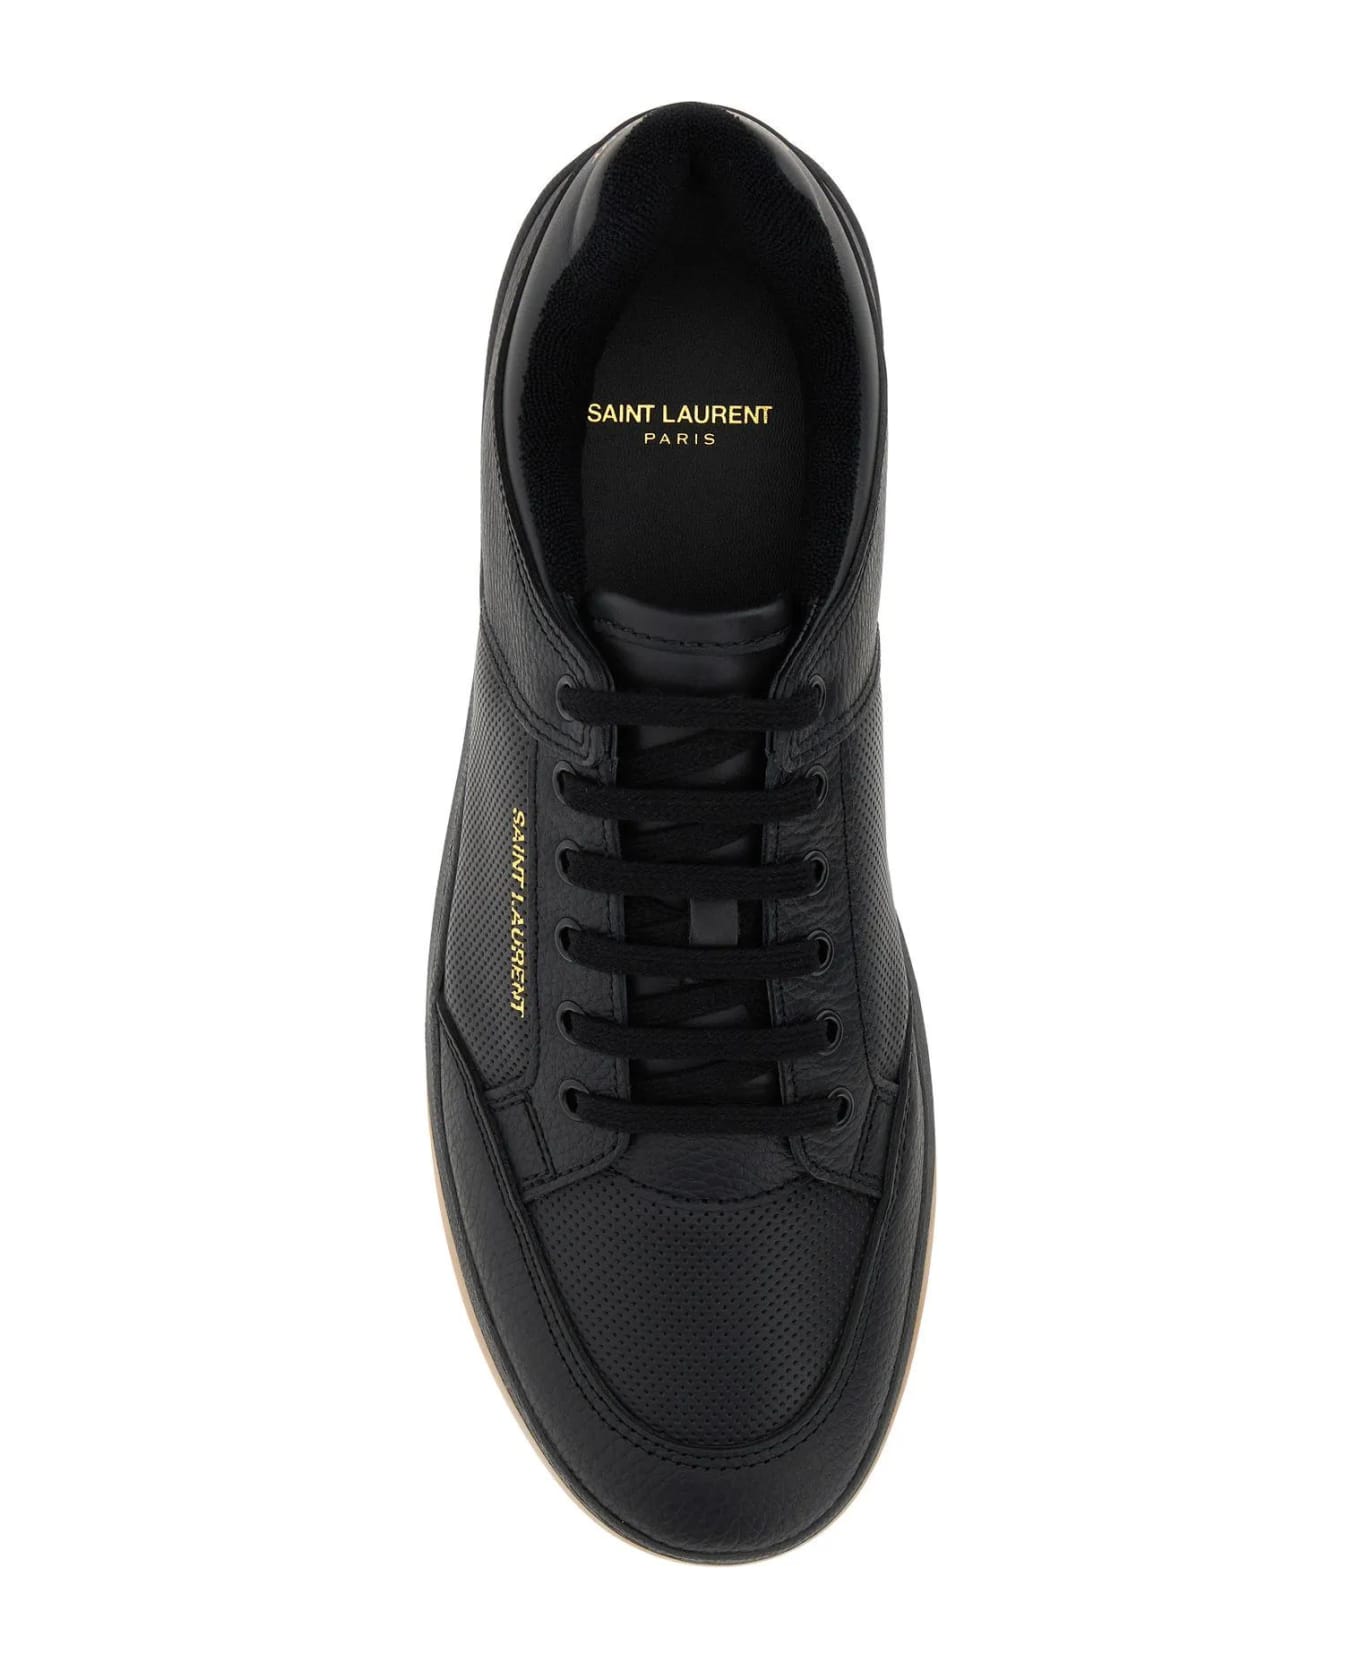 Saint Laurent Black Leather Sneakers - Black